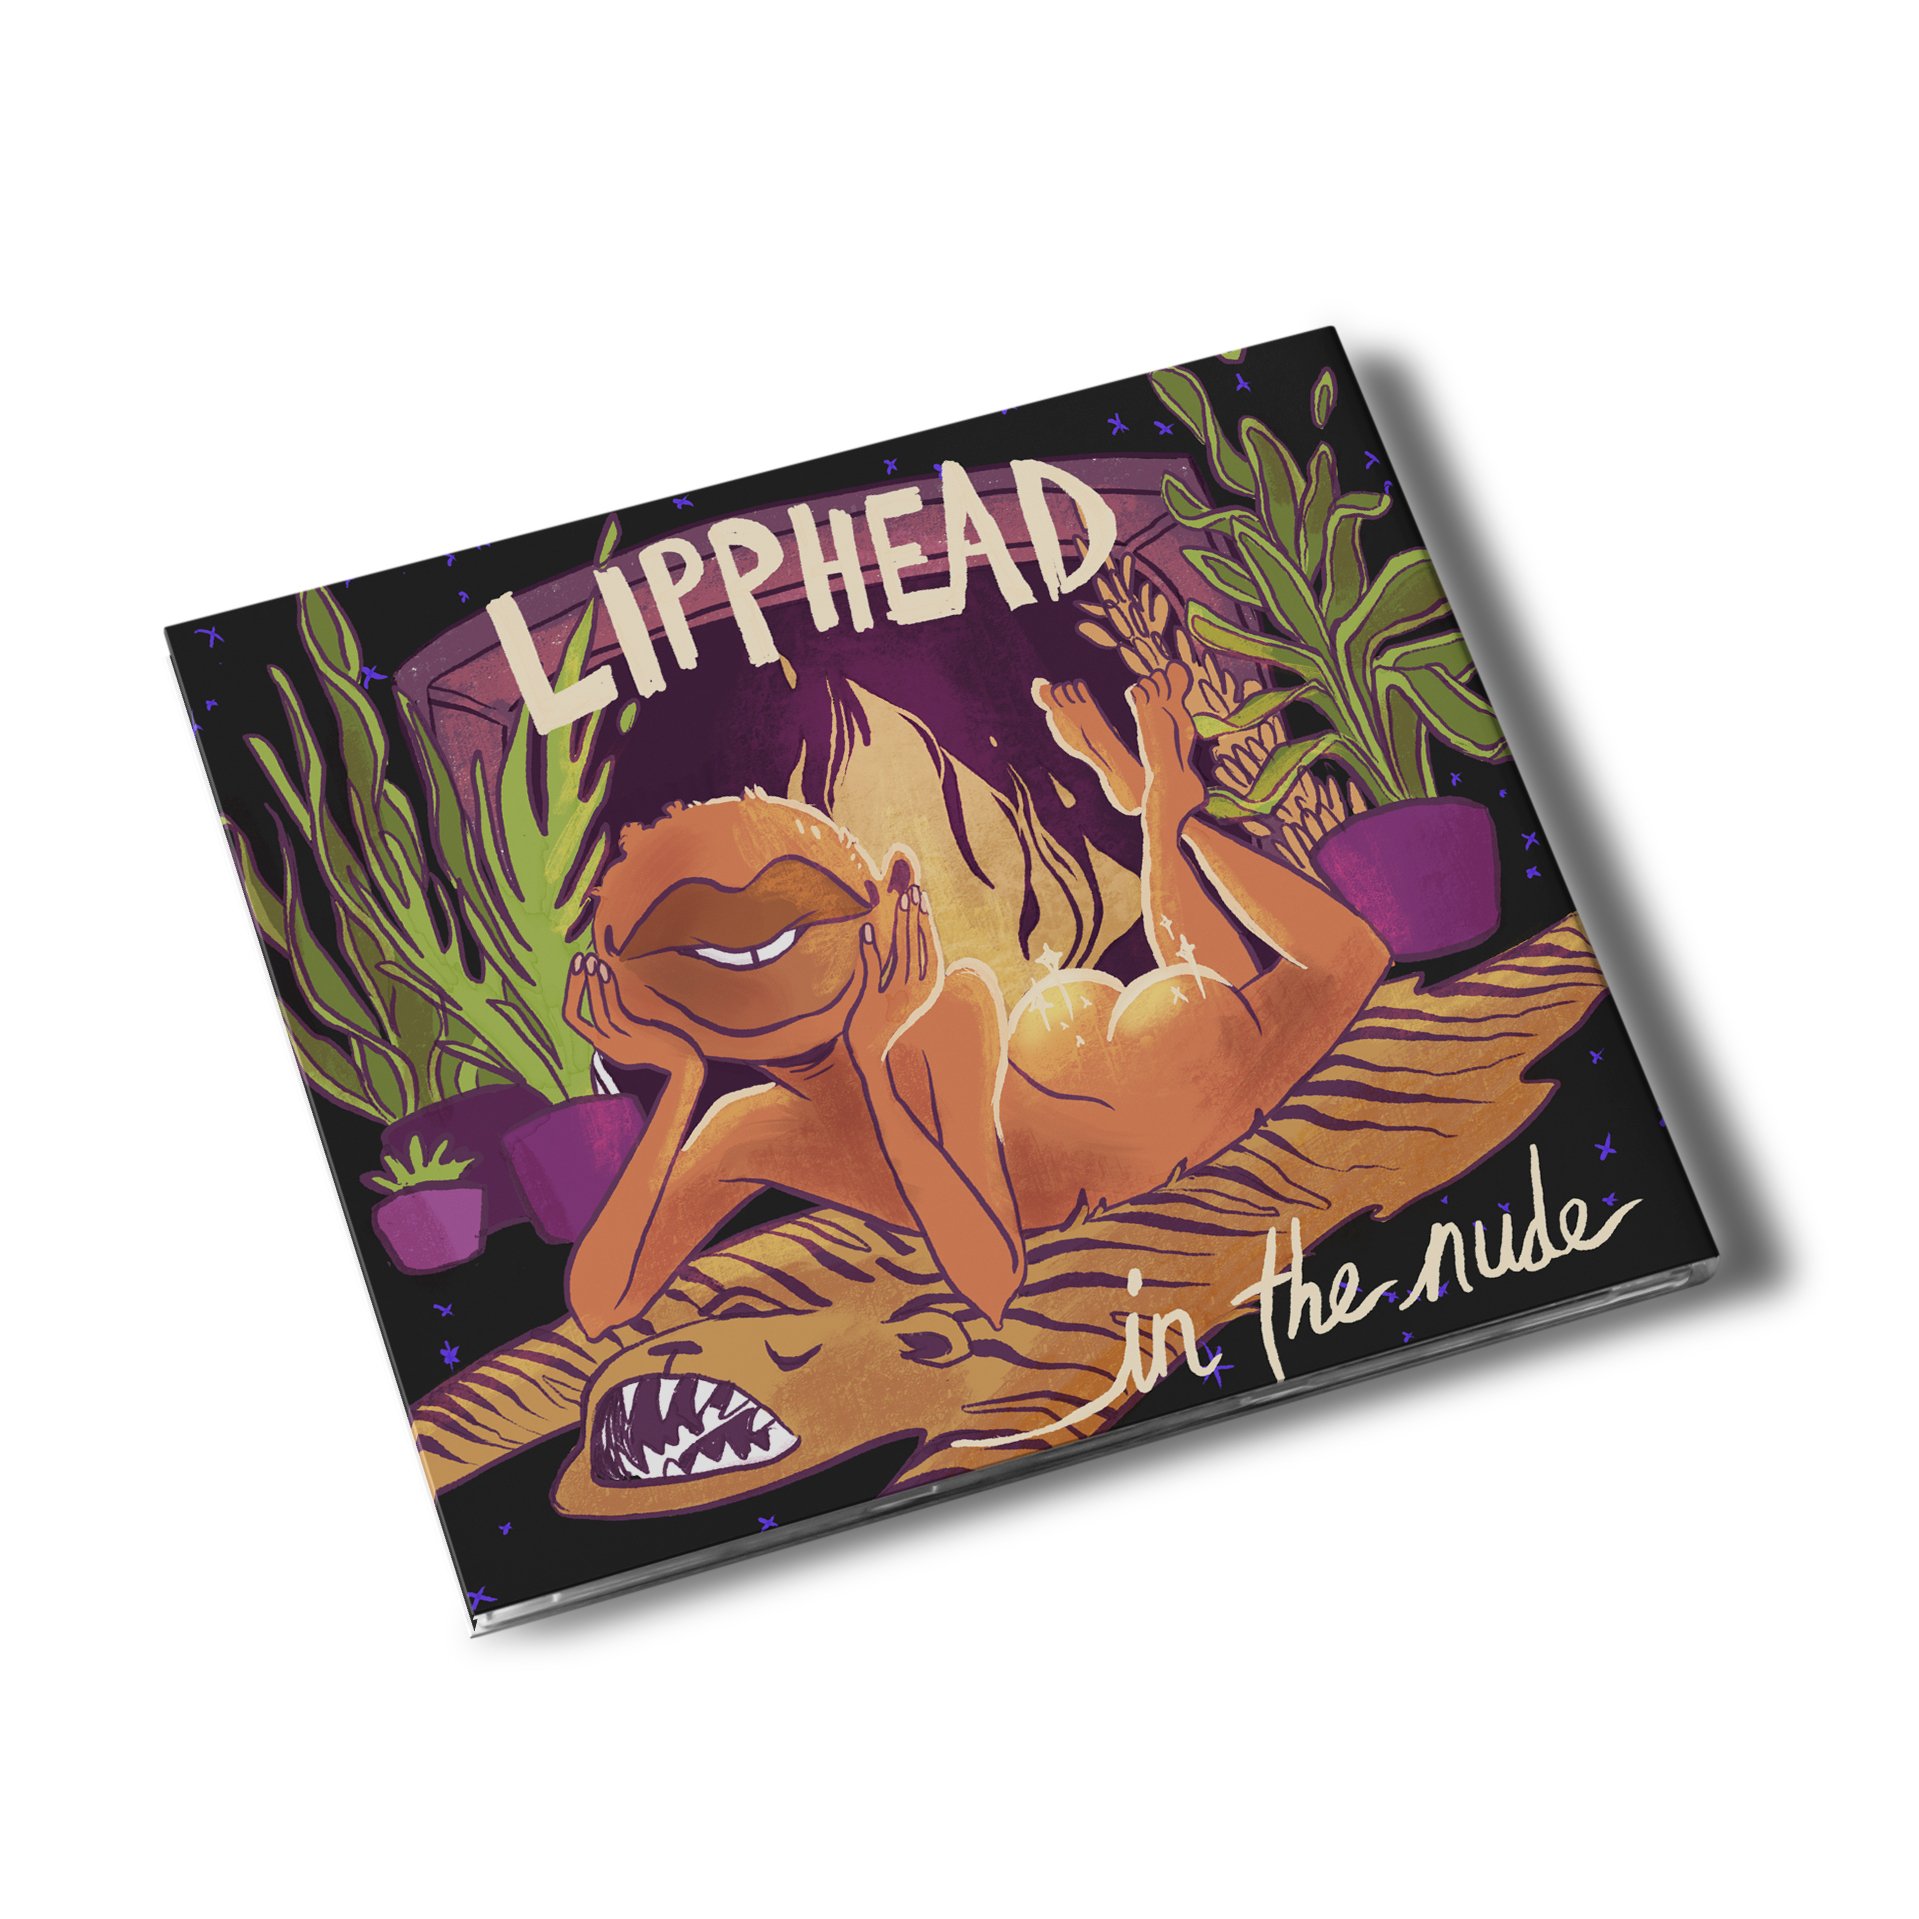 Lipphead - In The Nude (CD) – $12.00